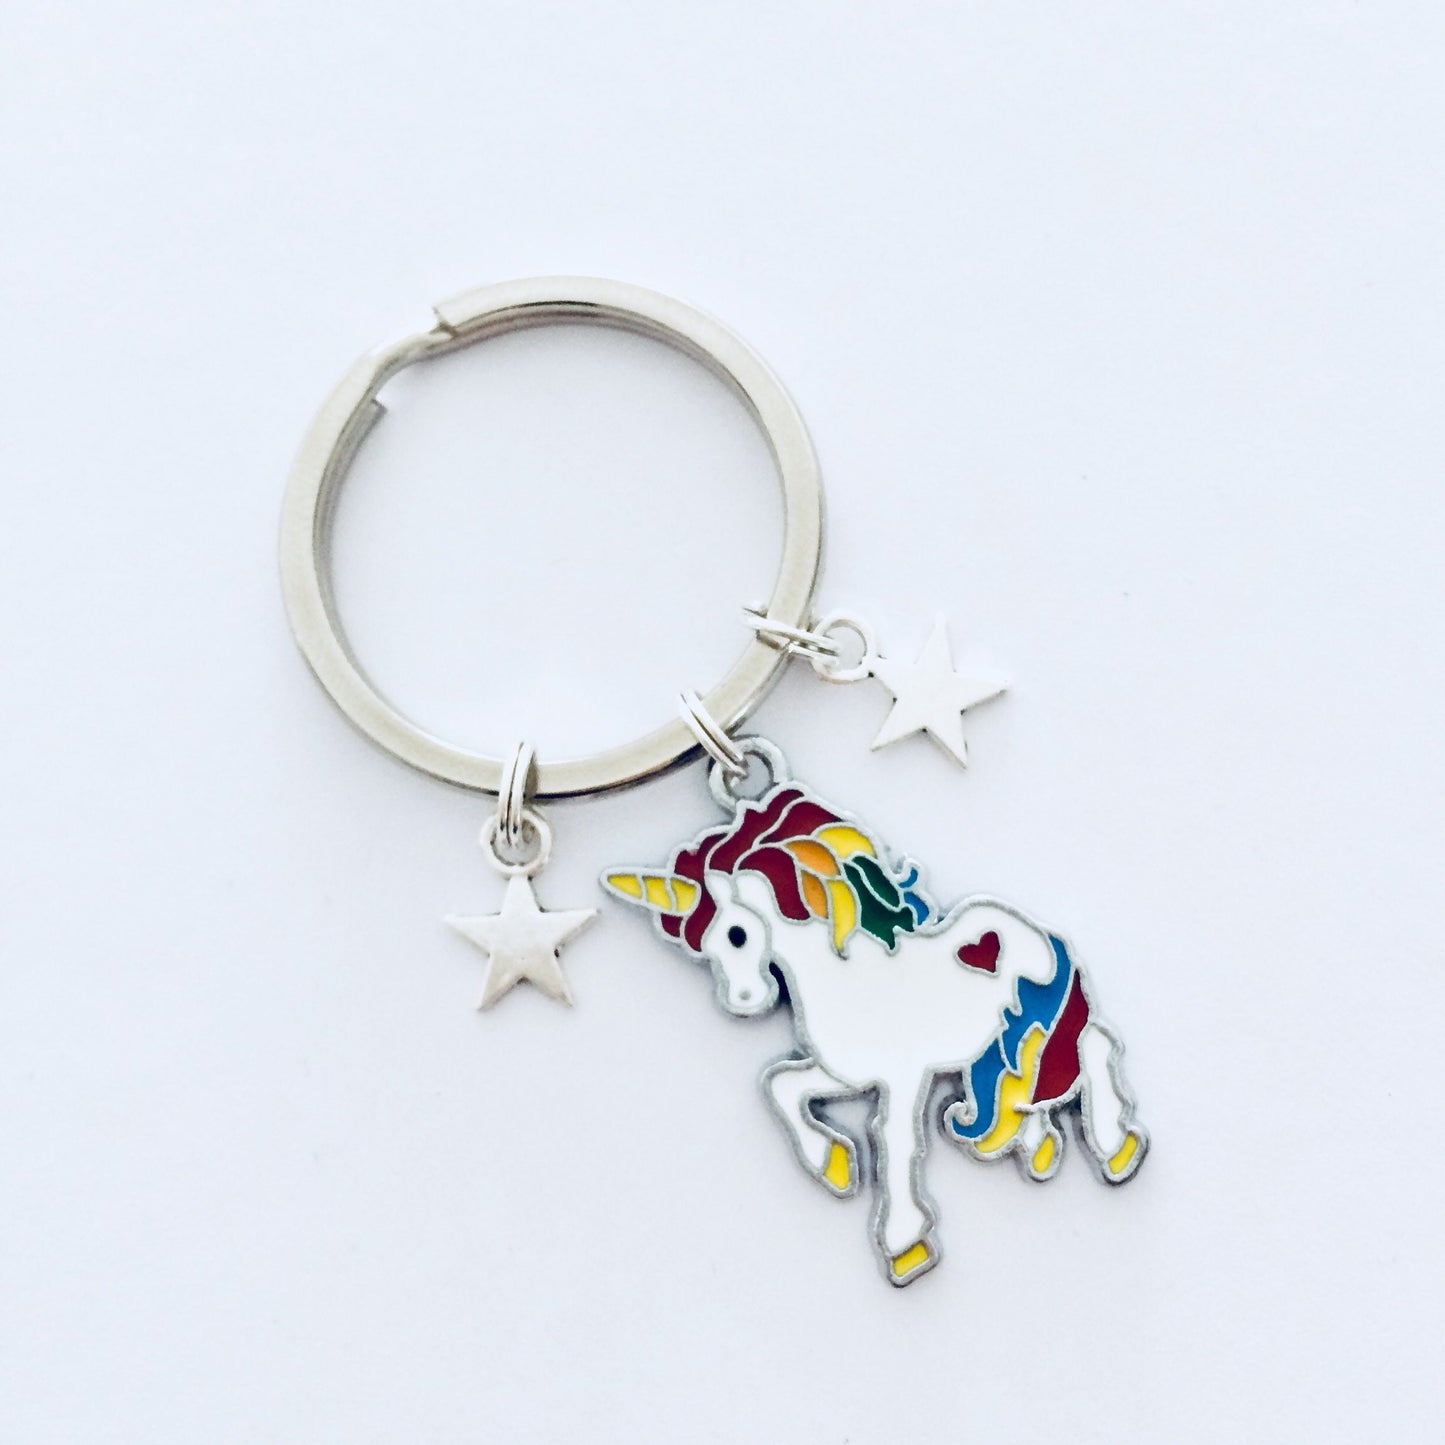 Unicorn Keyring, Keychain, Unicorn Gifts, Unicorn Lover Present, Enamel Unicorn Charm, Bag charm, Birthday gift, Daughter Party Bag Fillers.